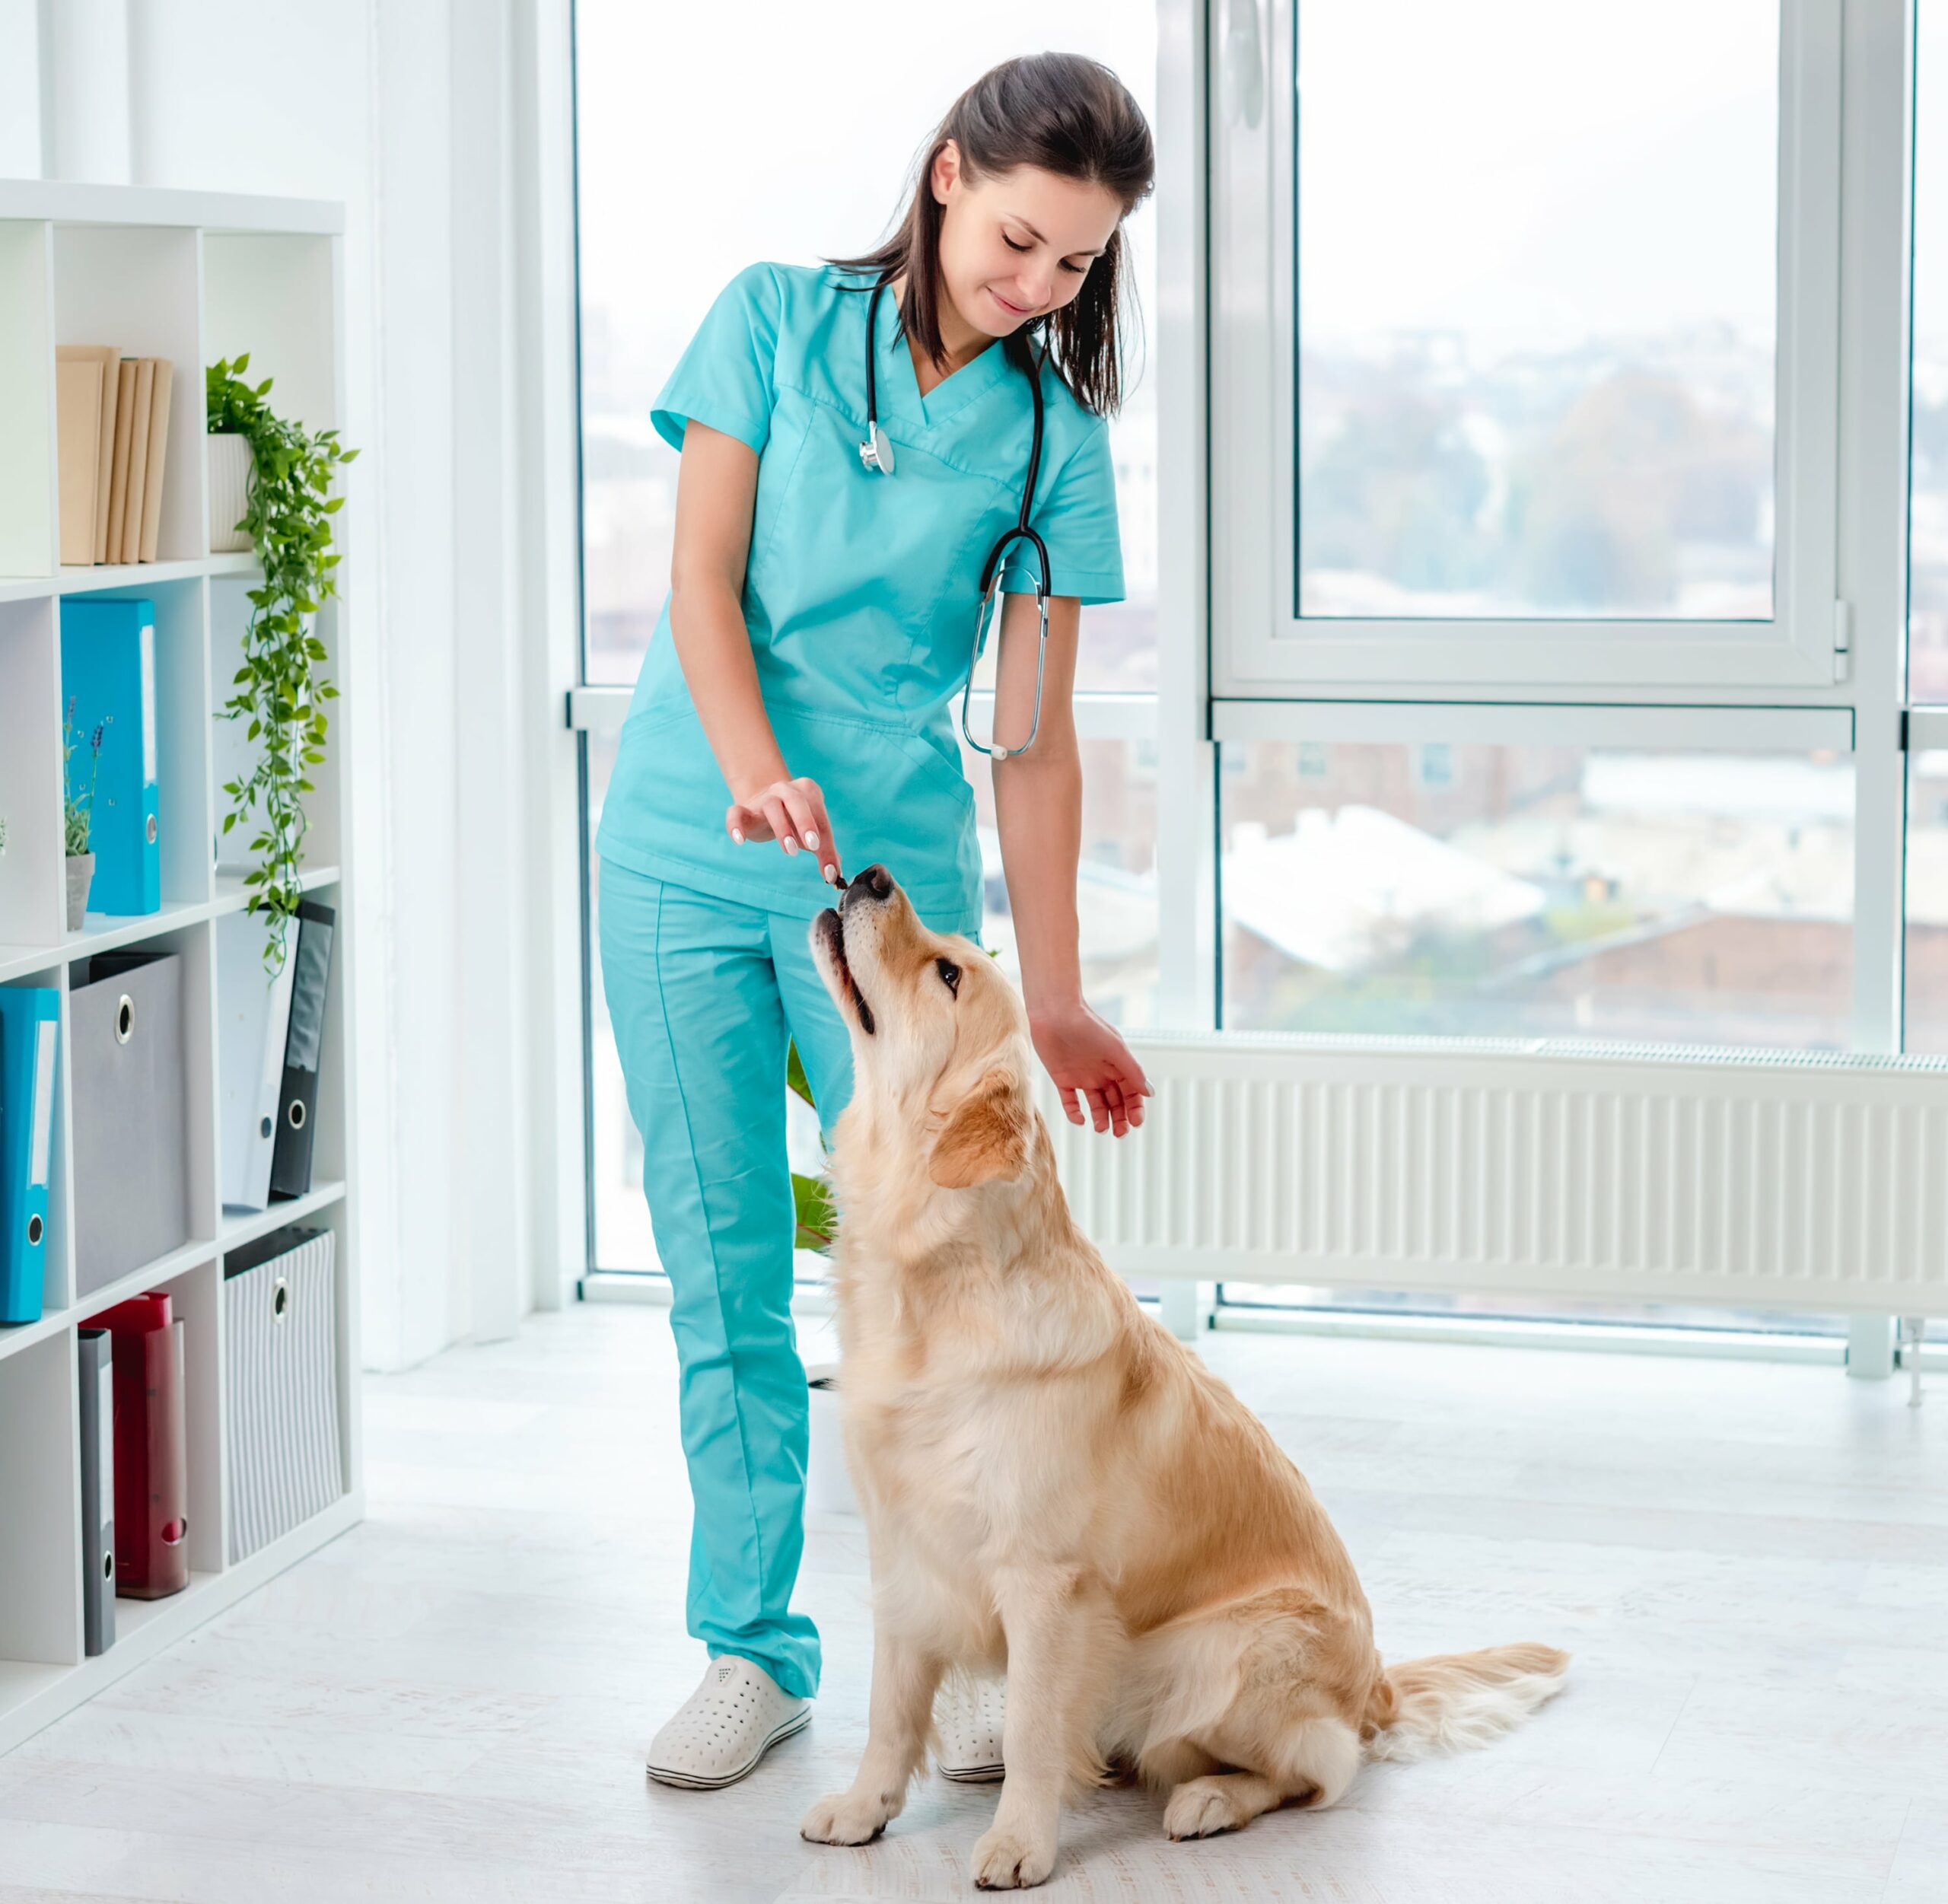 golden-retriever-dog-examination-in-veterinary-cli-min